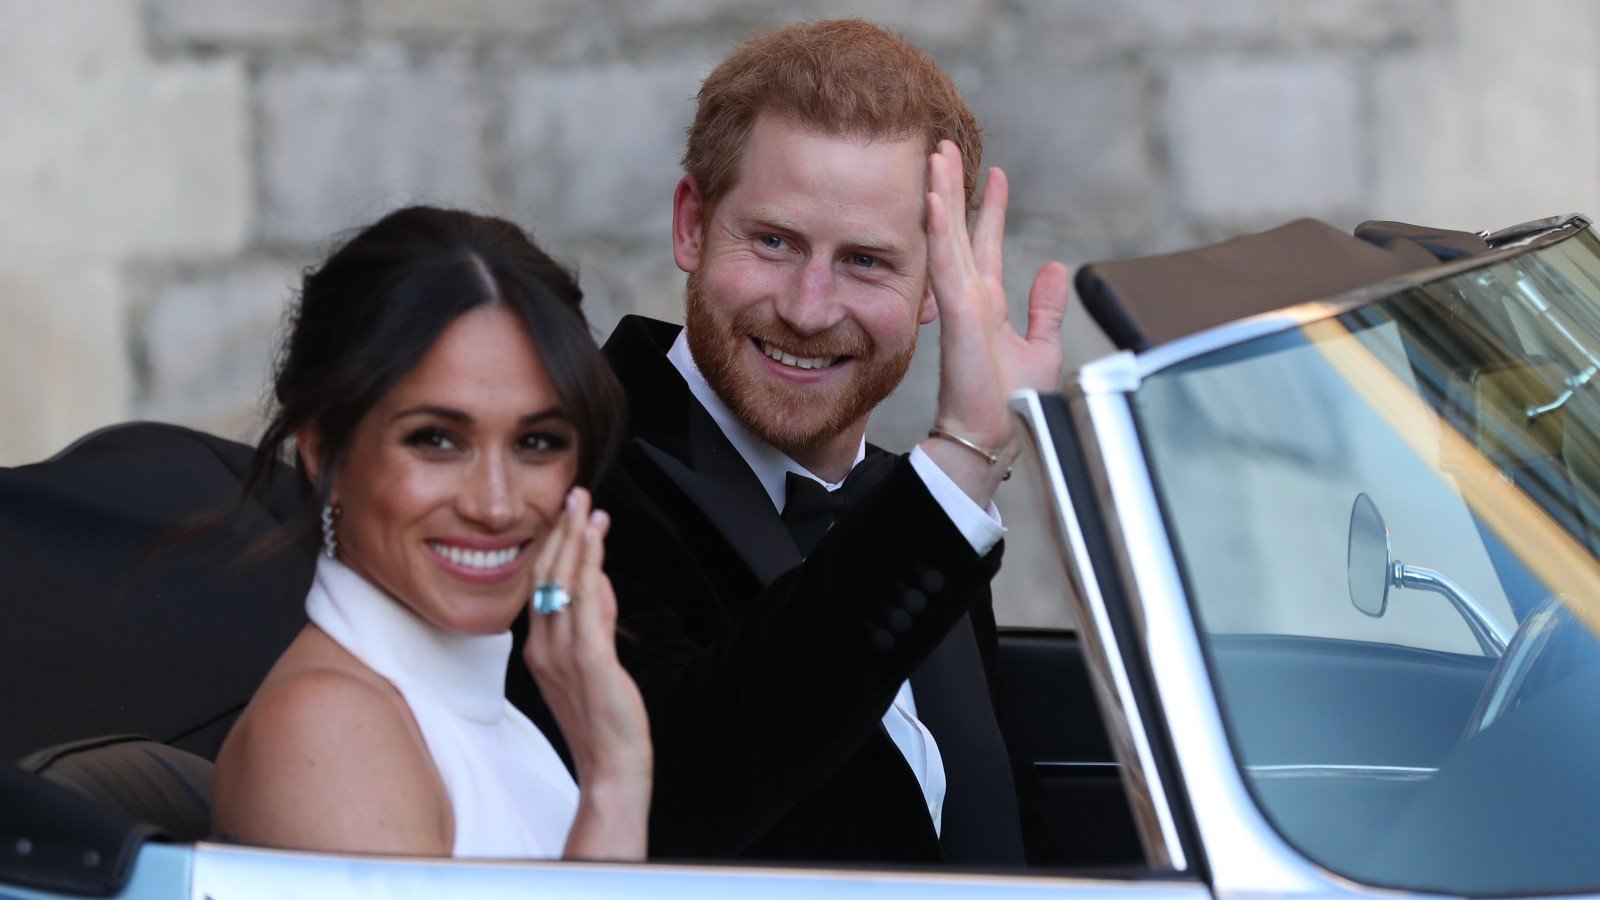 Prince Harry and Meghan Markle's wedding car secret message revealed